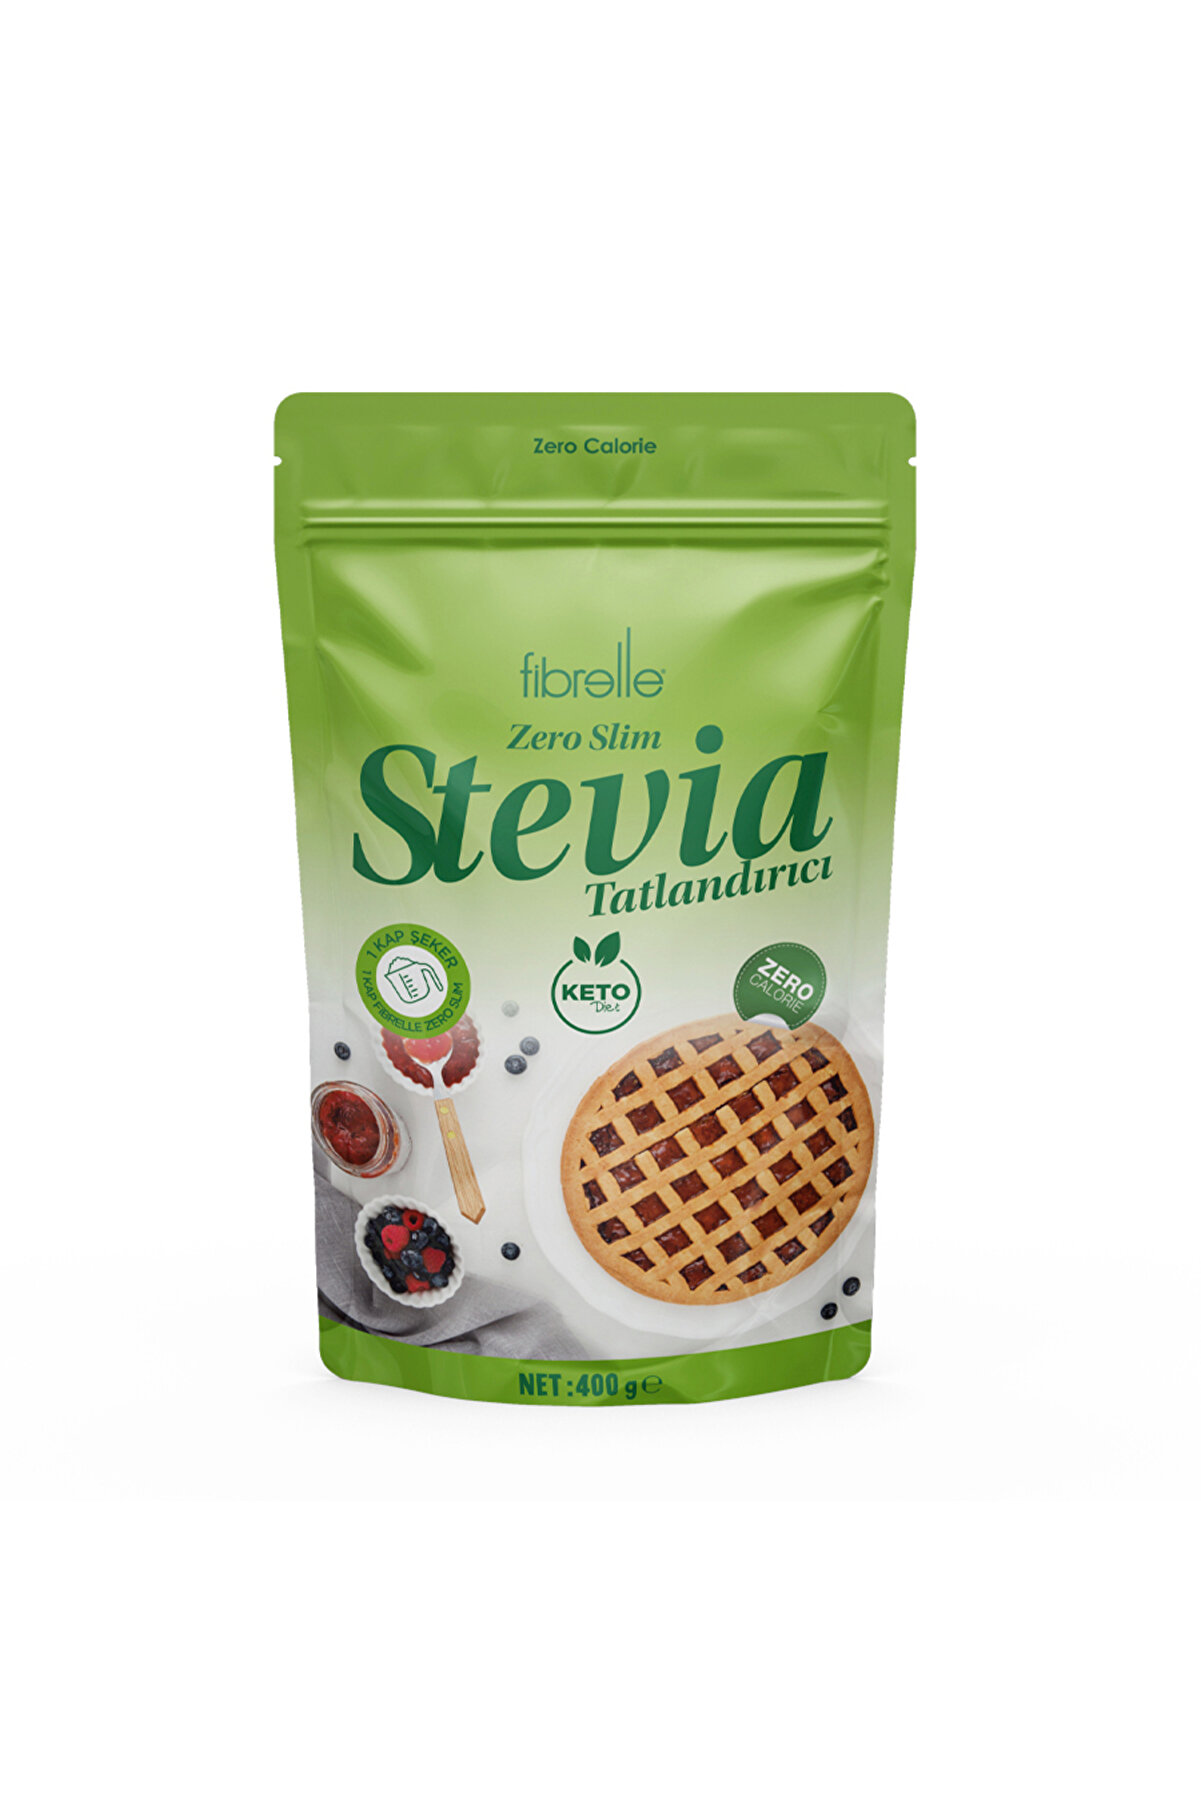 Fibrelle Zero Slim Stevia Toz Tatlandırıcı / Ketojenik / Sıfır Kalori / 400 G